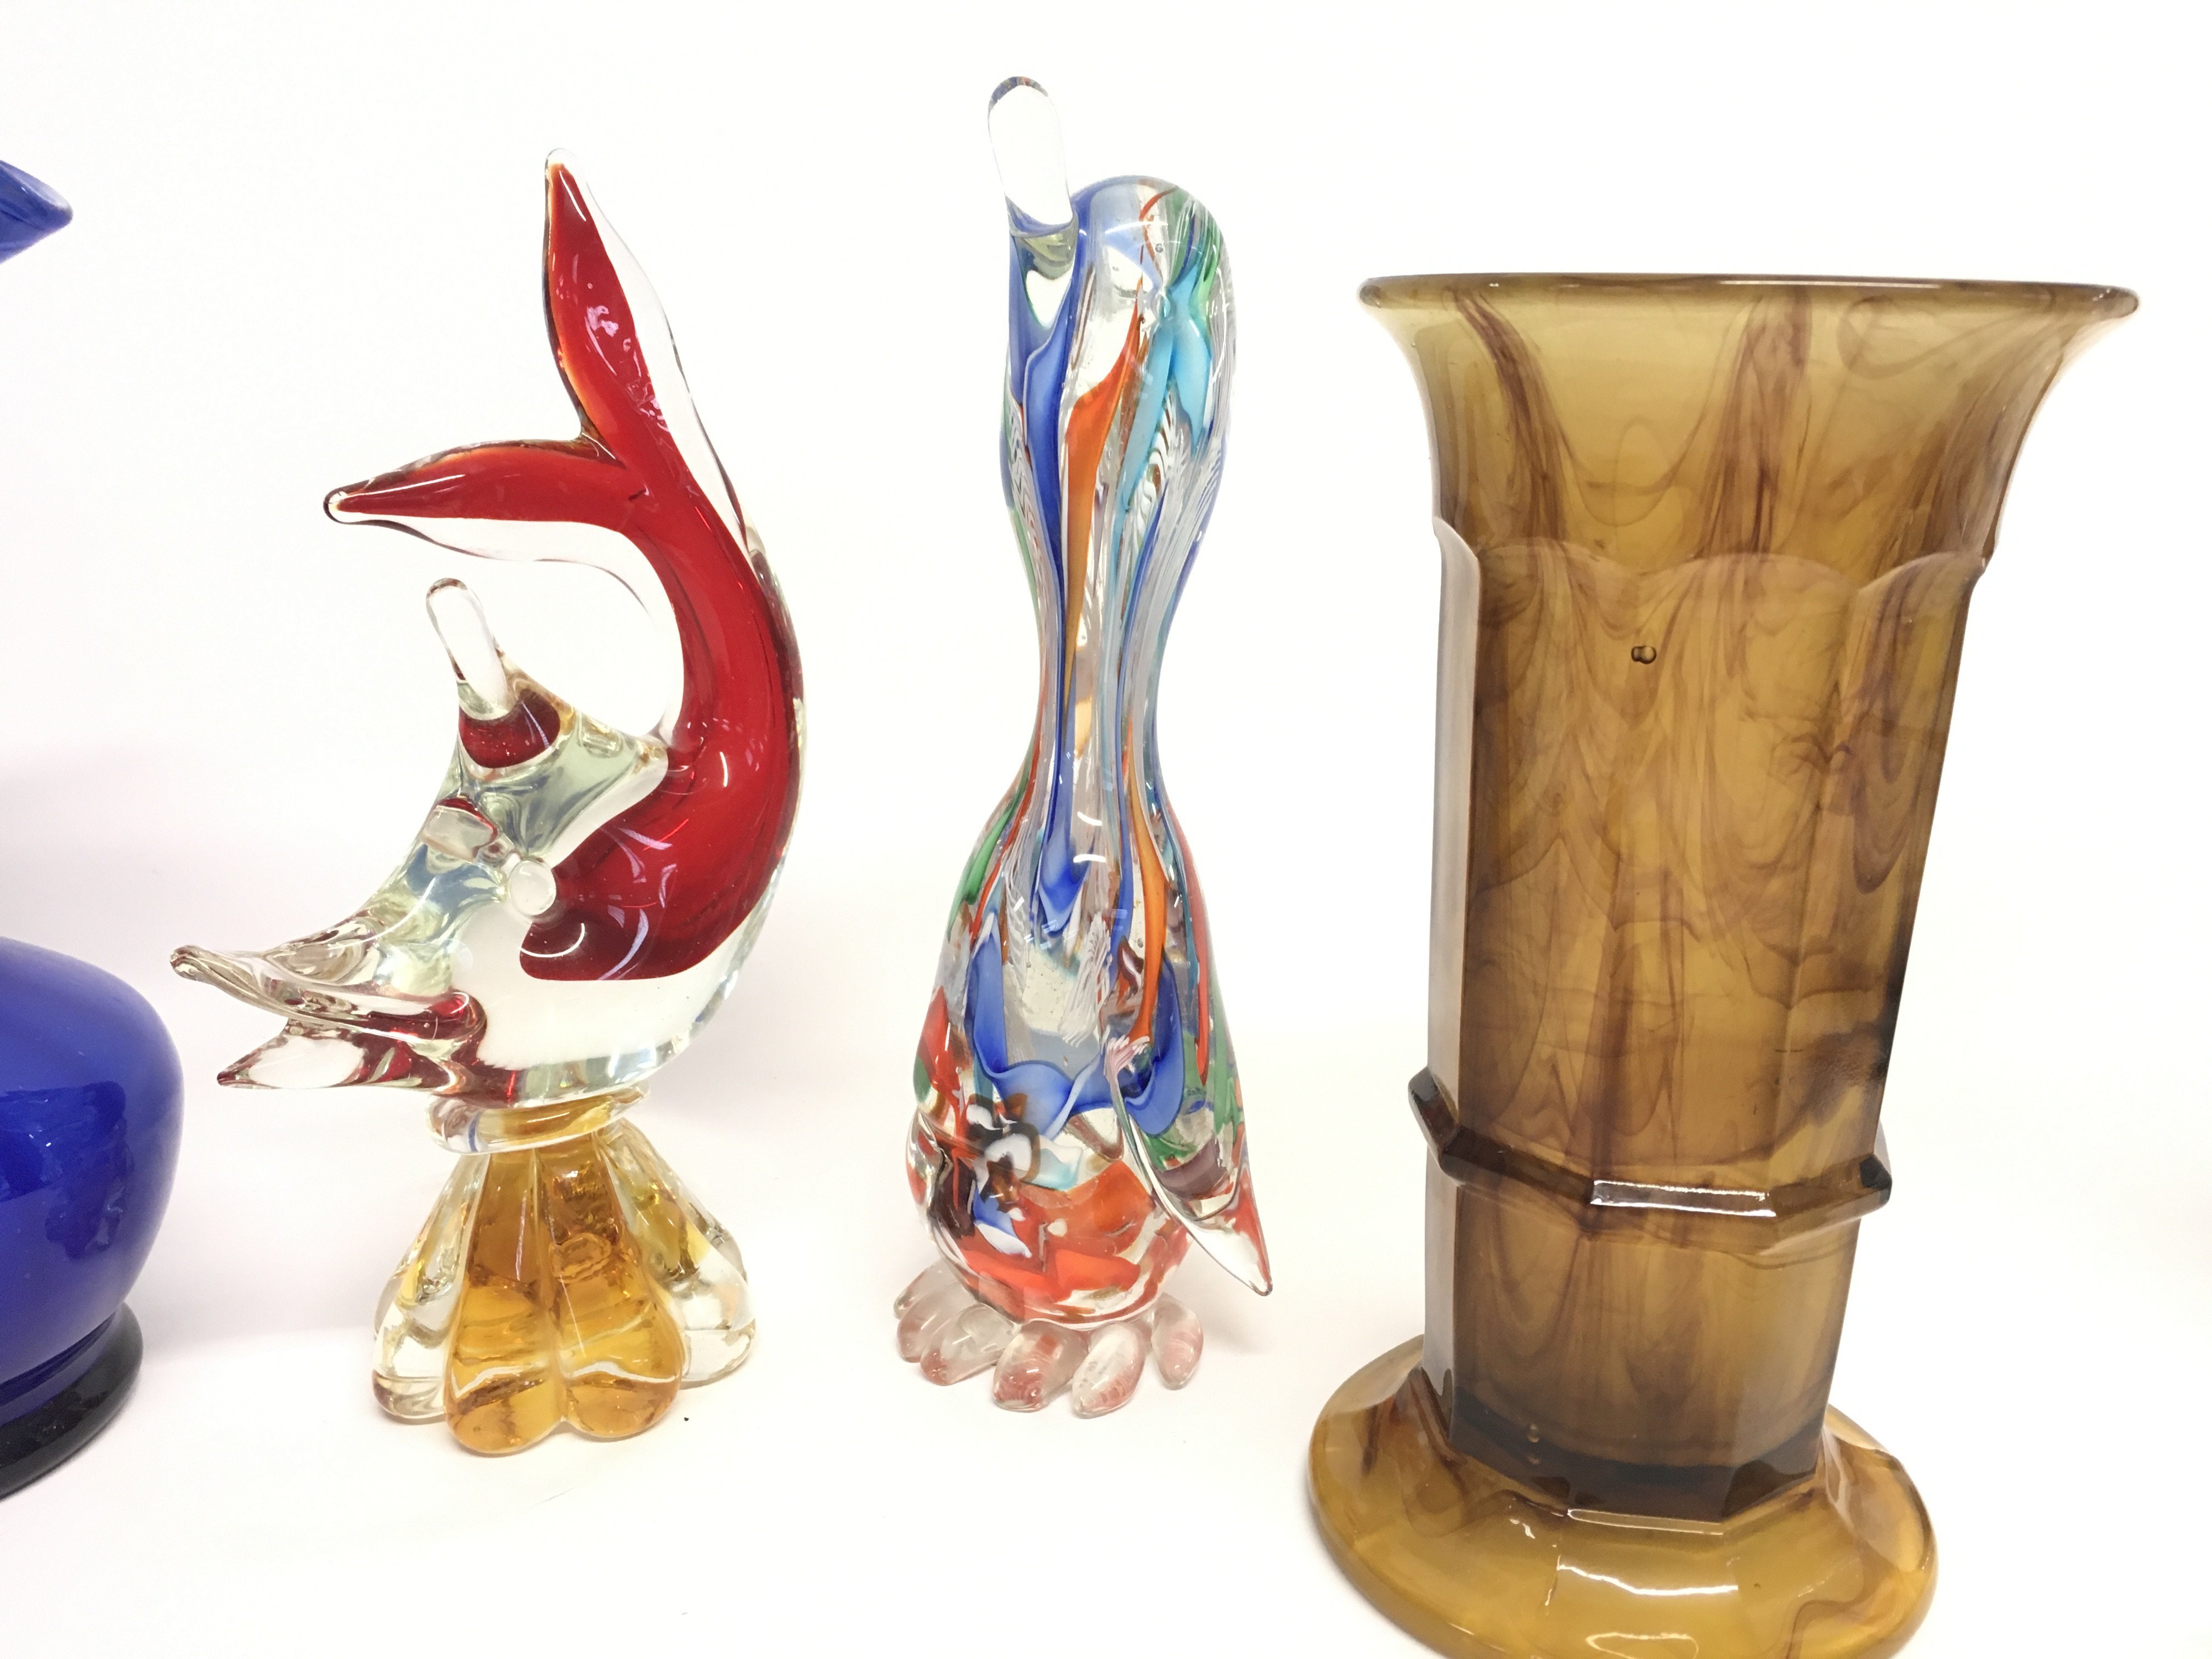 Vintage glassware vases including animal figures - Image 3 of 3